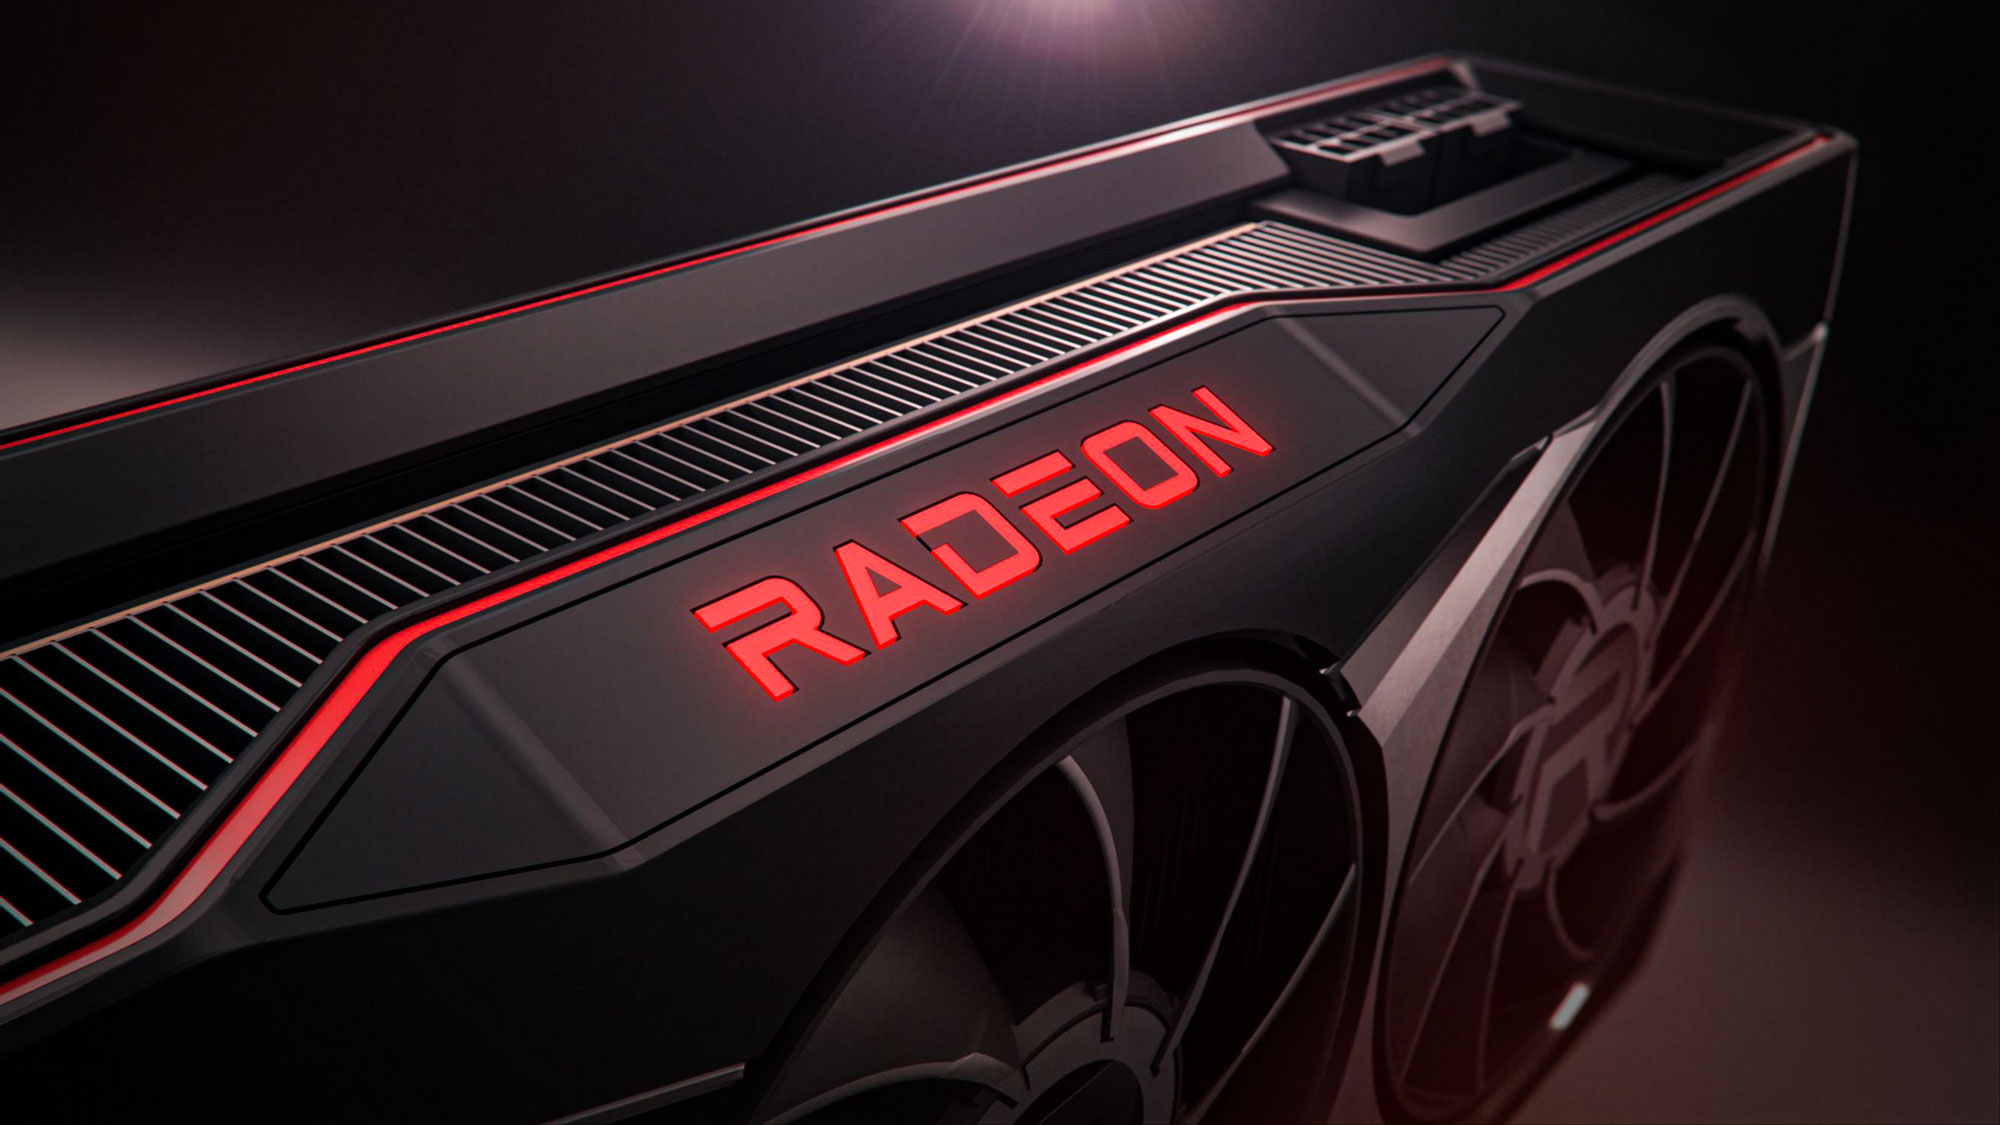 GeForce RTX 3080 vs. Radeon RX 6800 XT: Which GPU should you buy